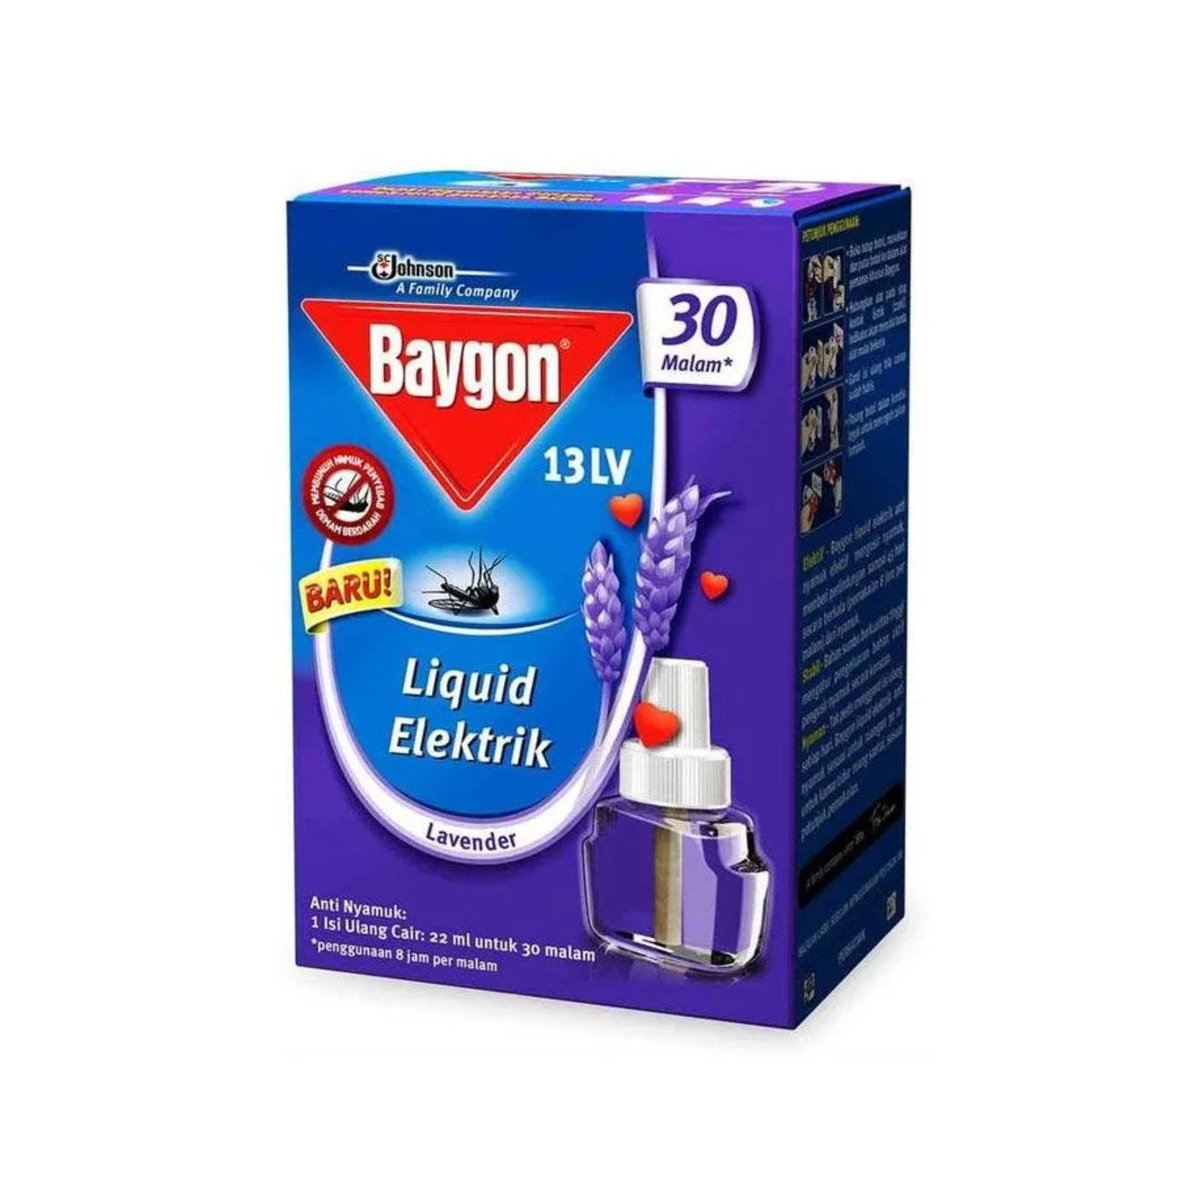 Baygon Liquid Elektrik Lavender Set 30